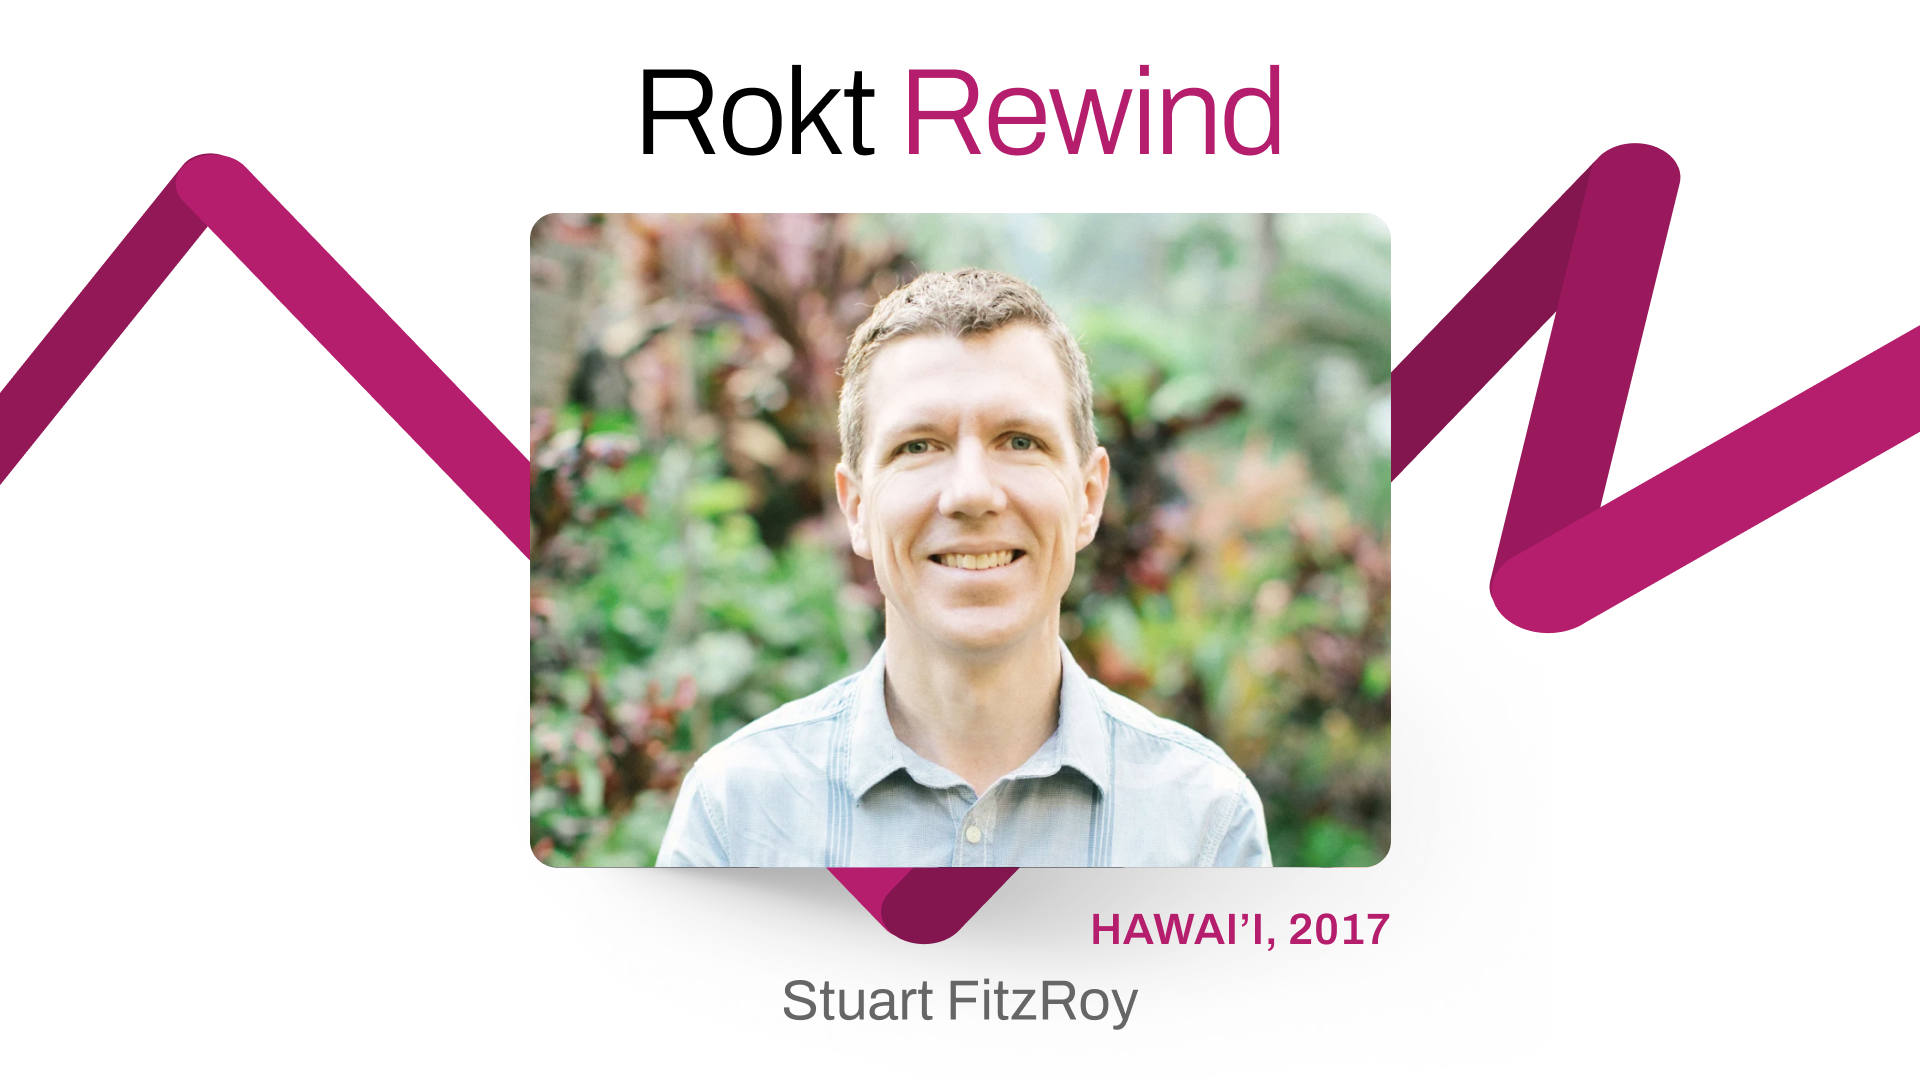 Rokt Rewind with Stuart FitzRoy